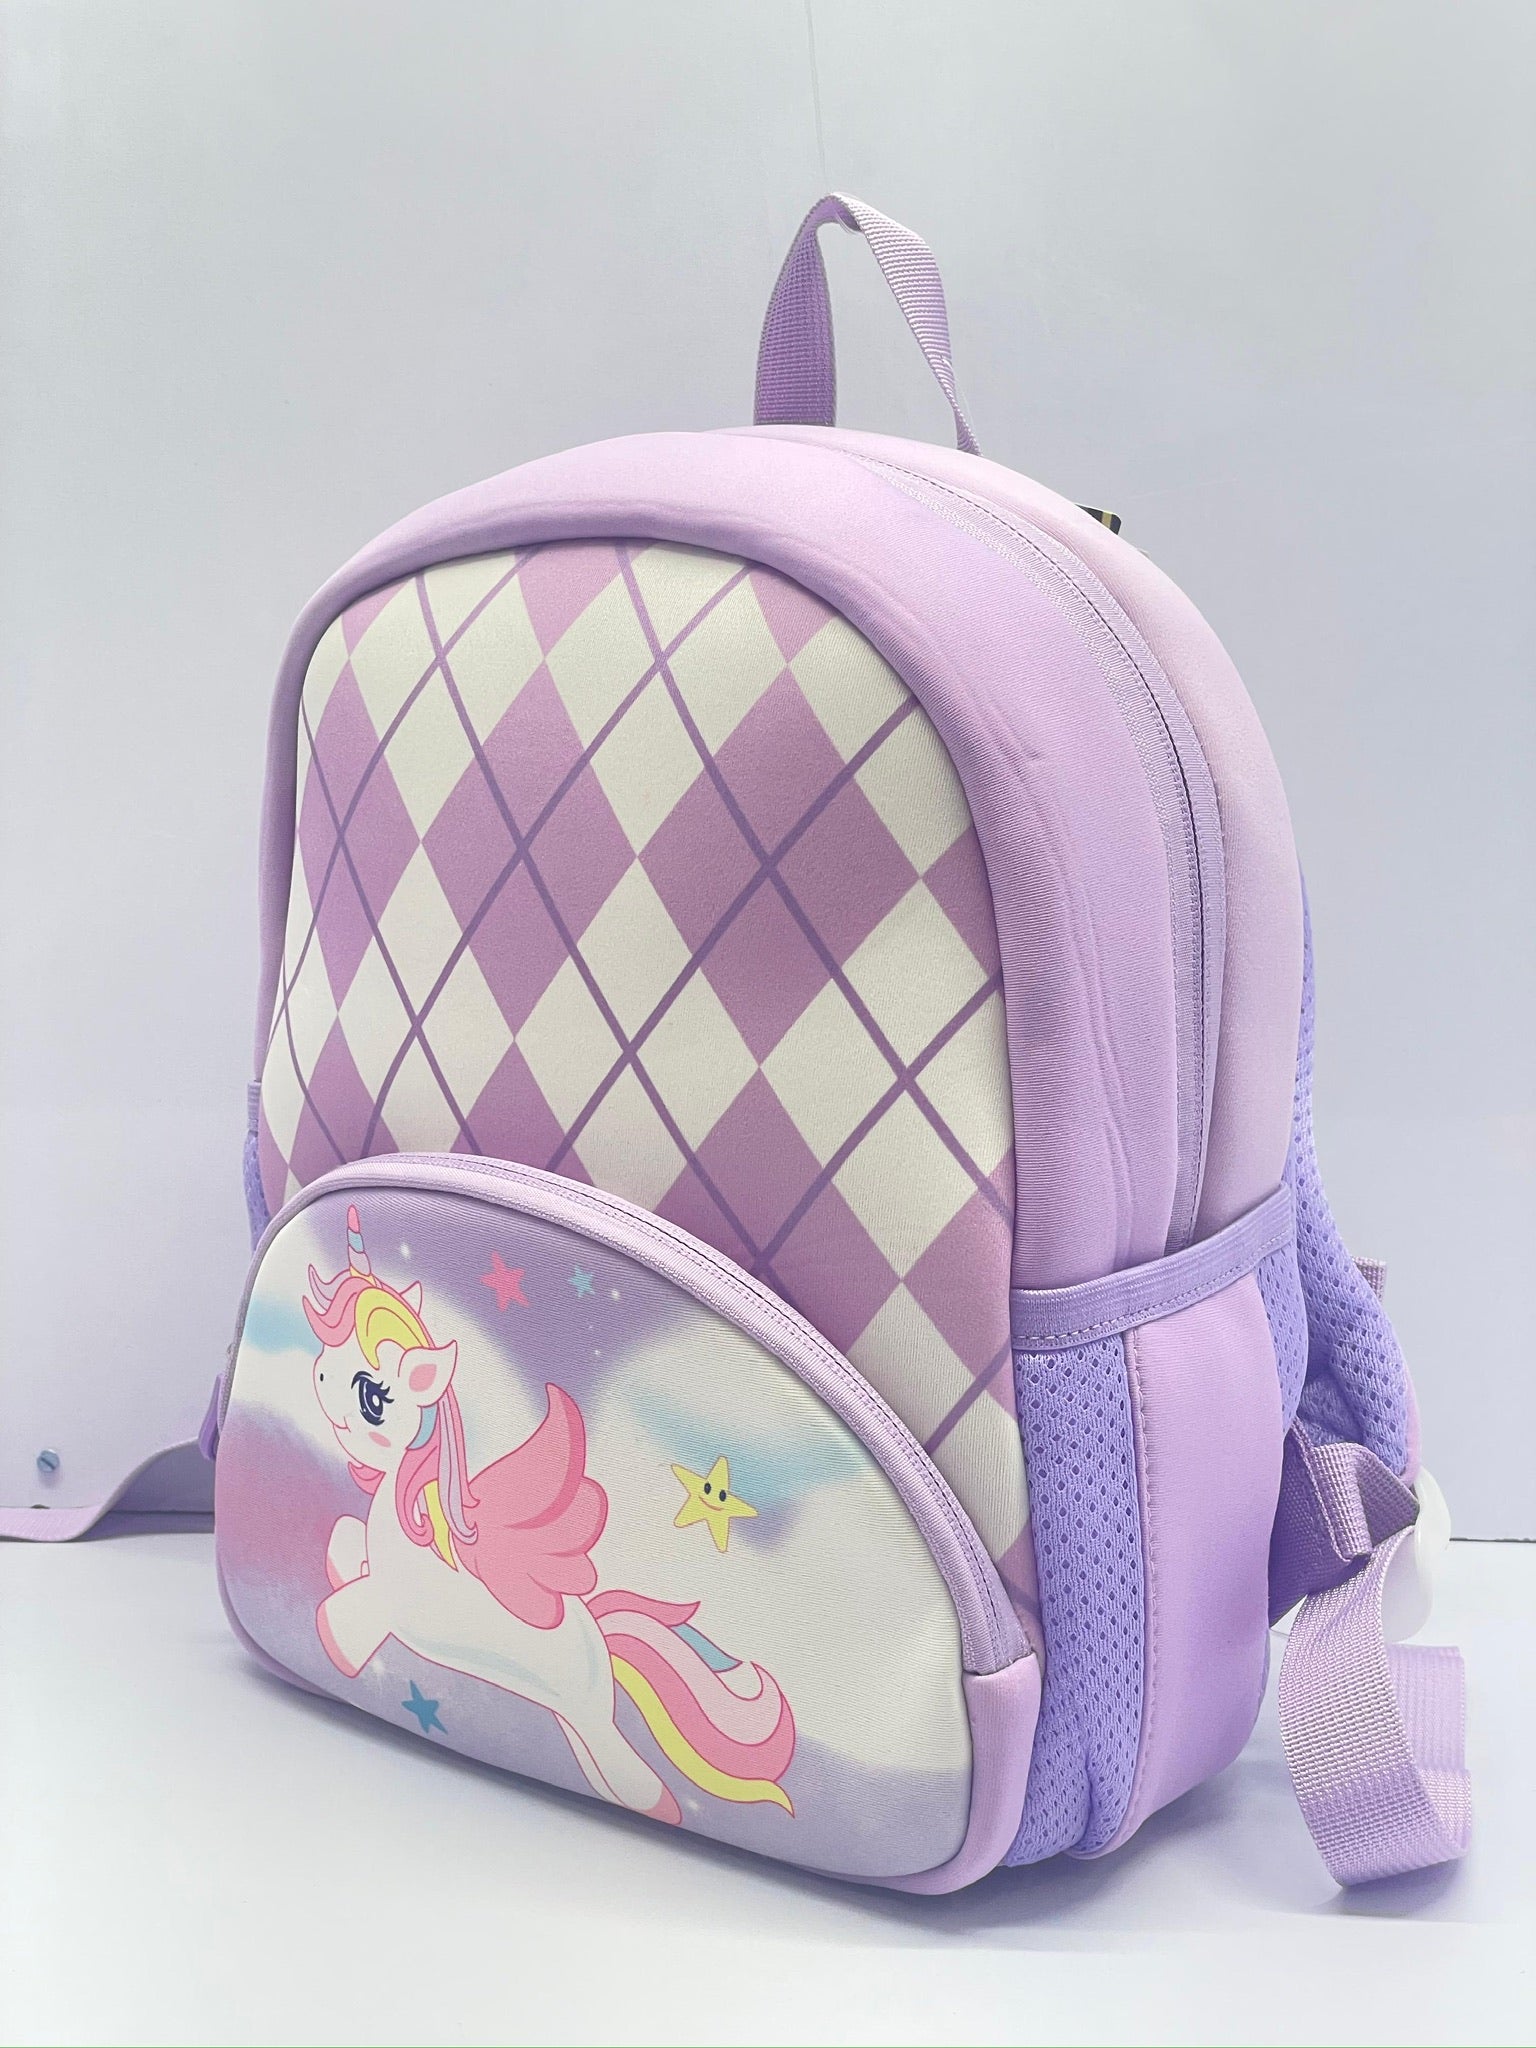 ZORSE unicorn school backpacks! Take your kiddo to a magical world!